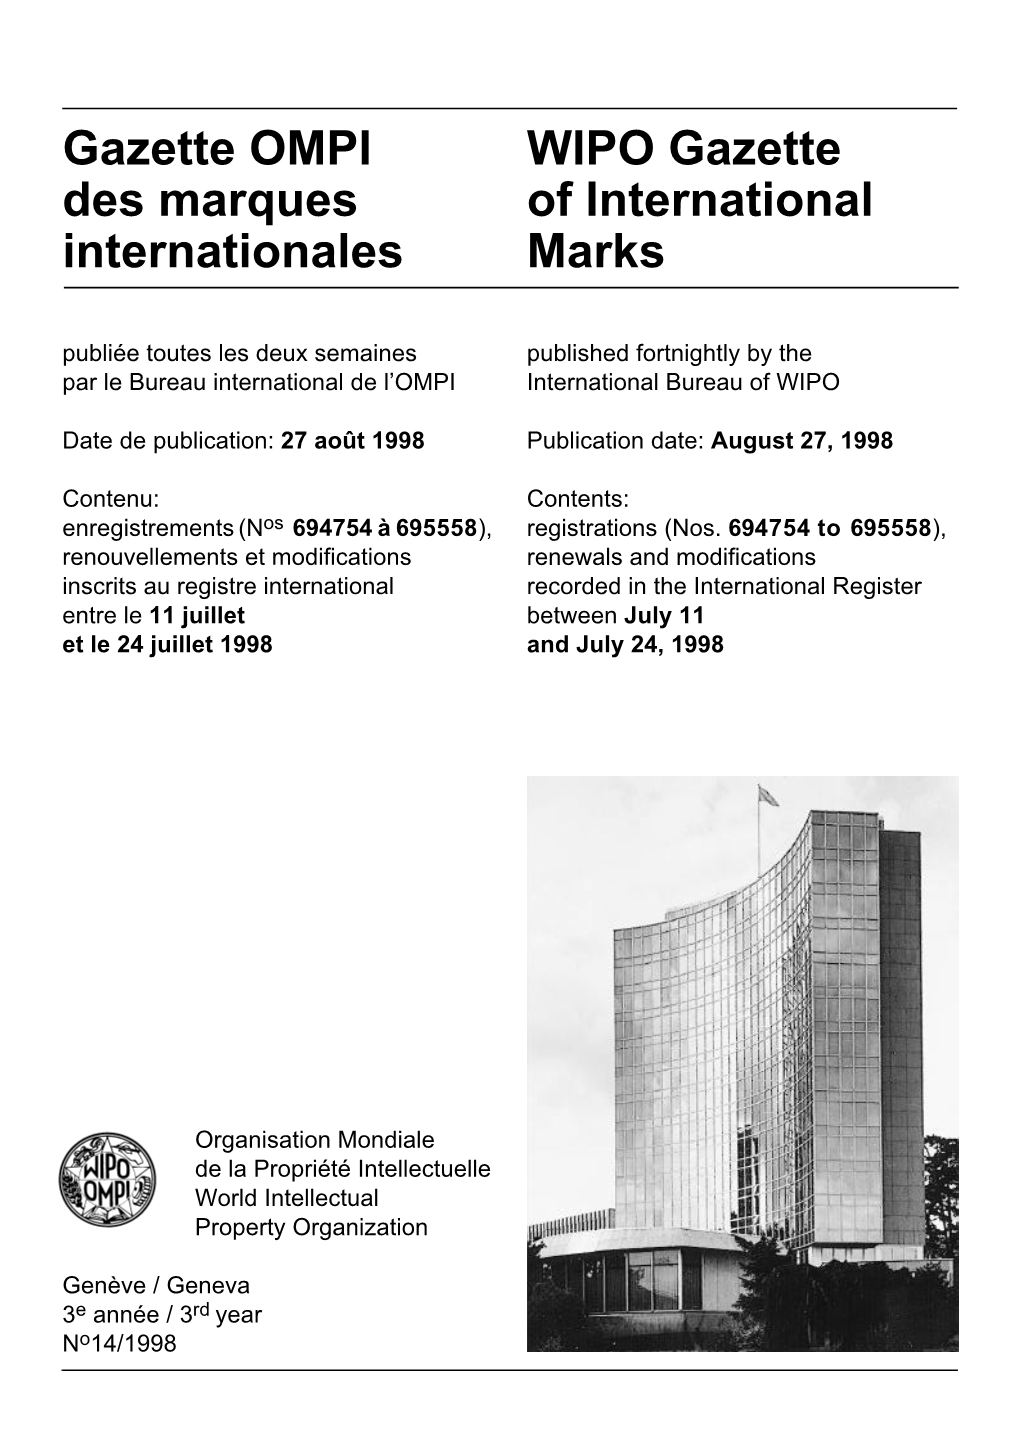 Gazette OMPI Des Marques Internationales No 14/1998 / WIPO Gazette of International Marks No